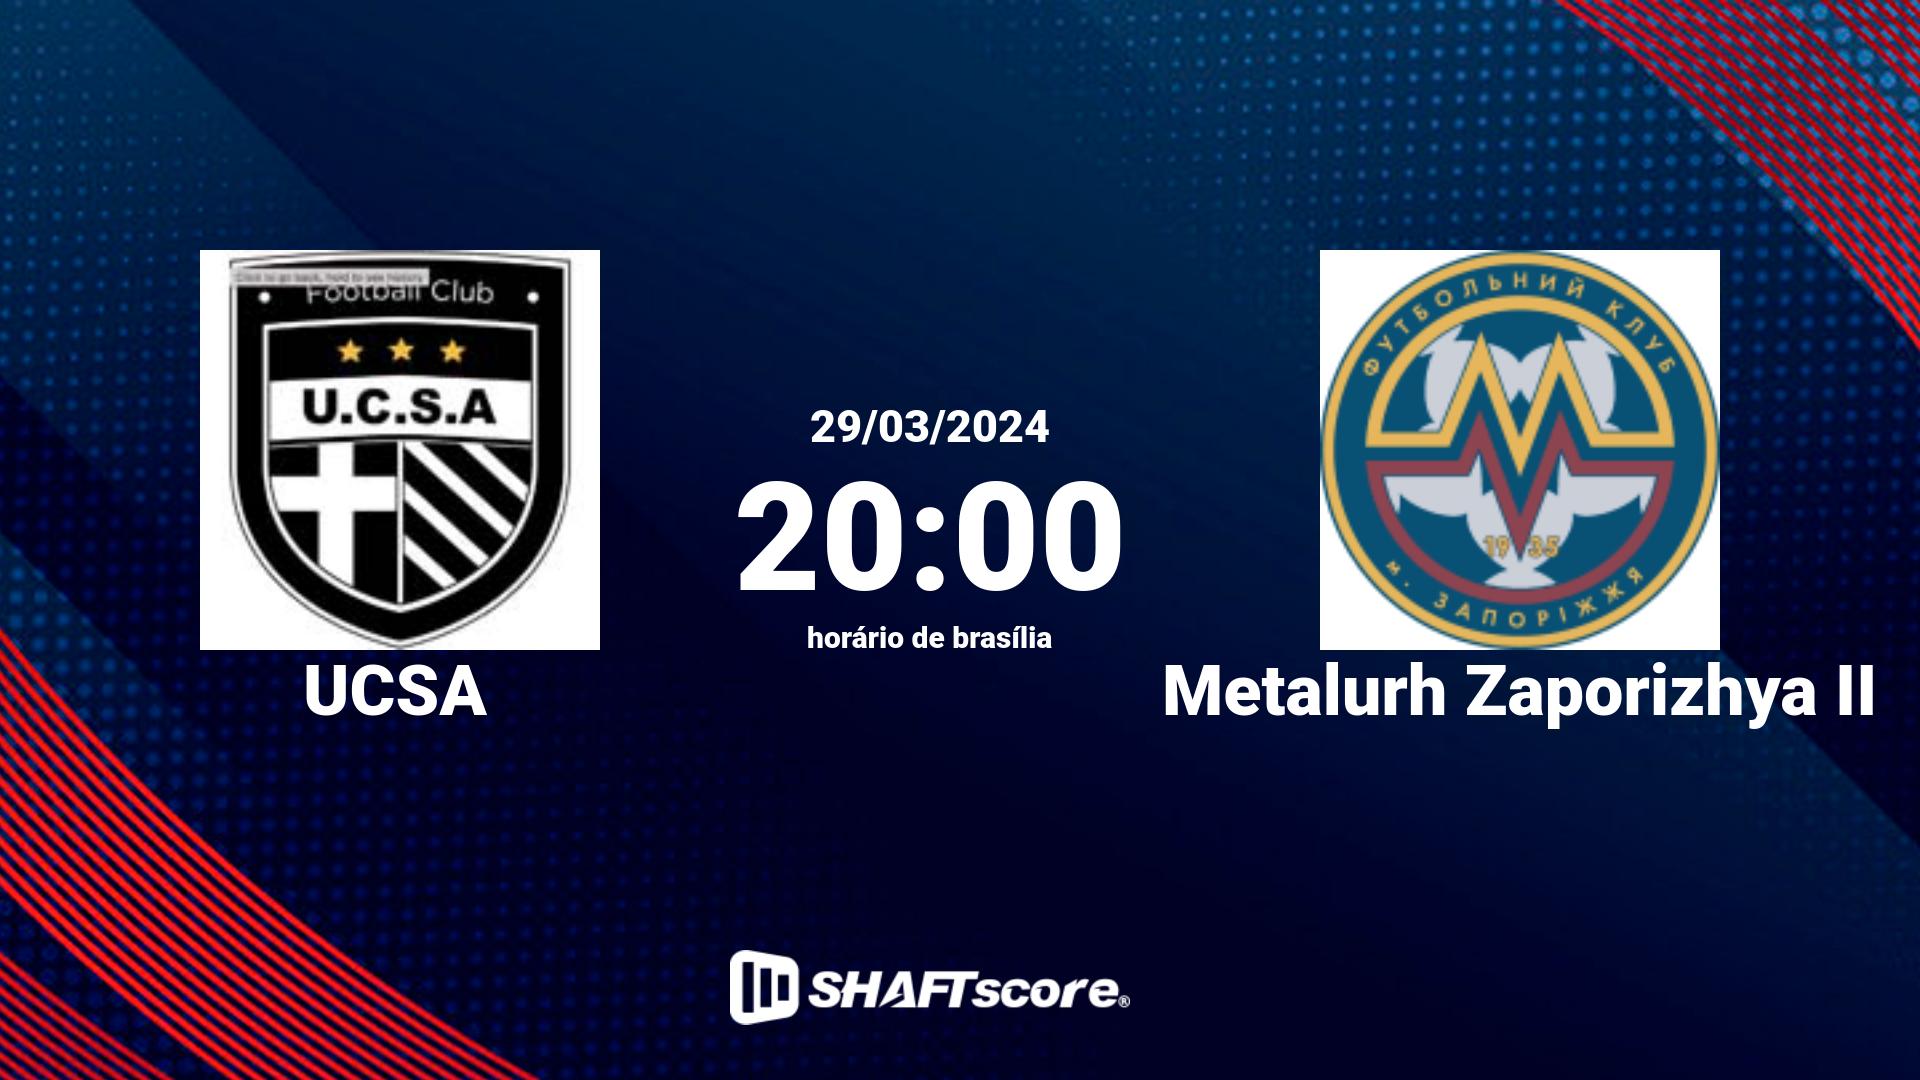 Estatísticas do jogo UCSA vs Metalurh Zaporizhya II 29.03 21:00